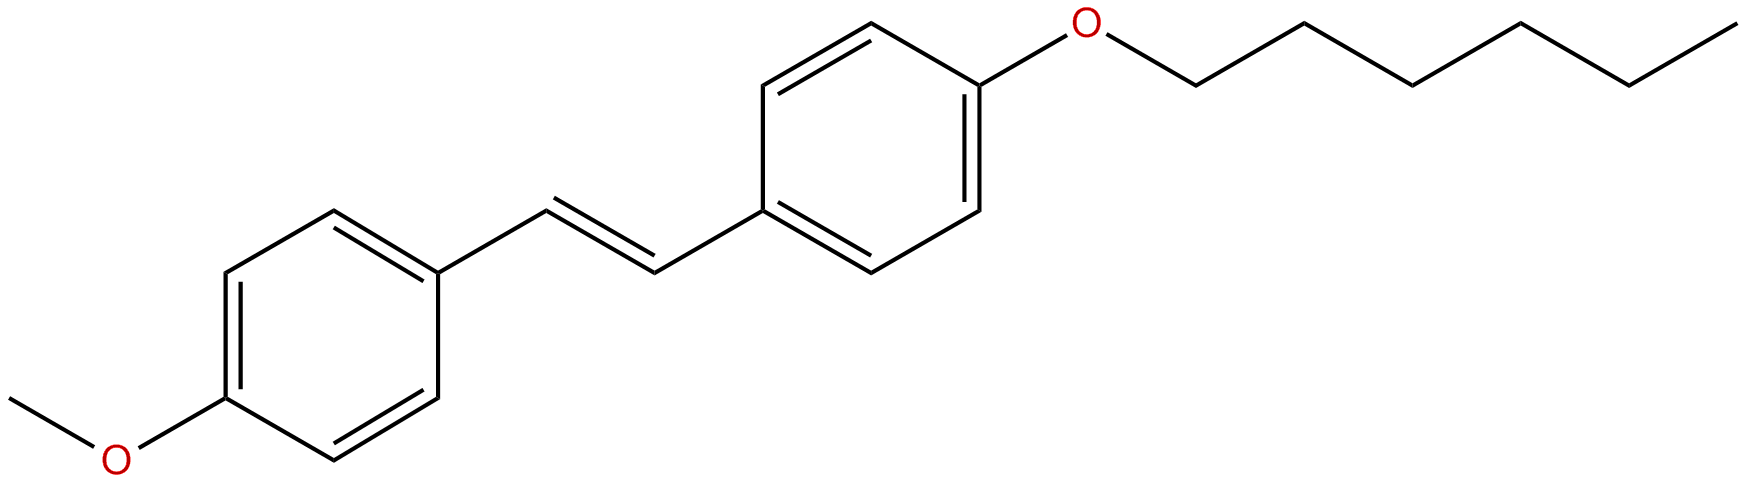 Image of (E)-1-(4-methoxyphenyl)-2-(4-hexoxyphenyl)ethene